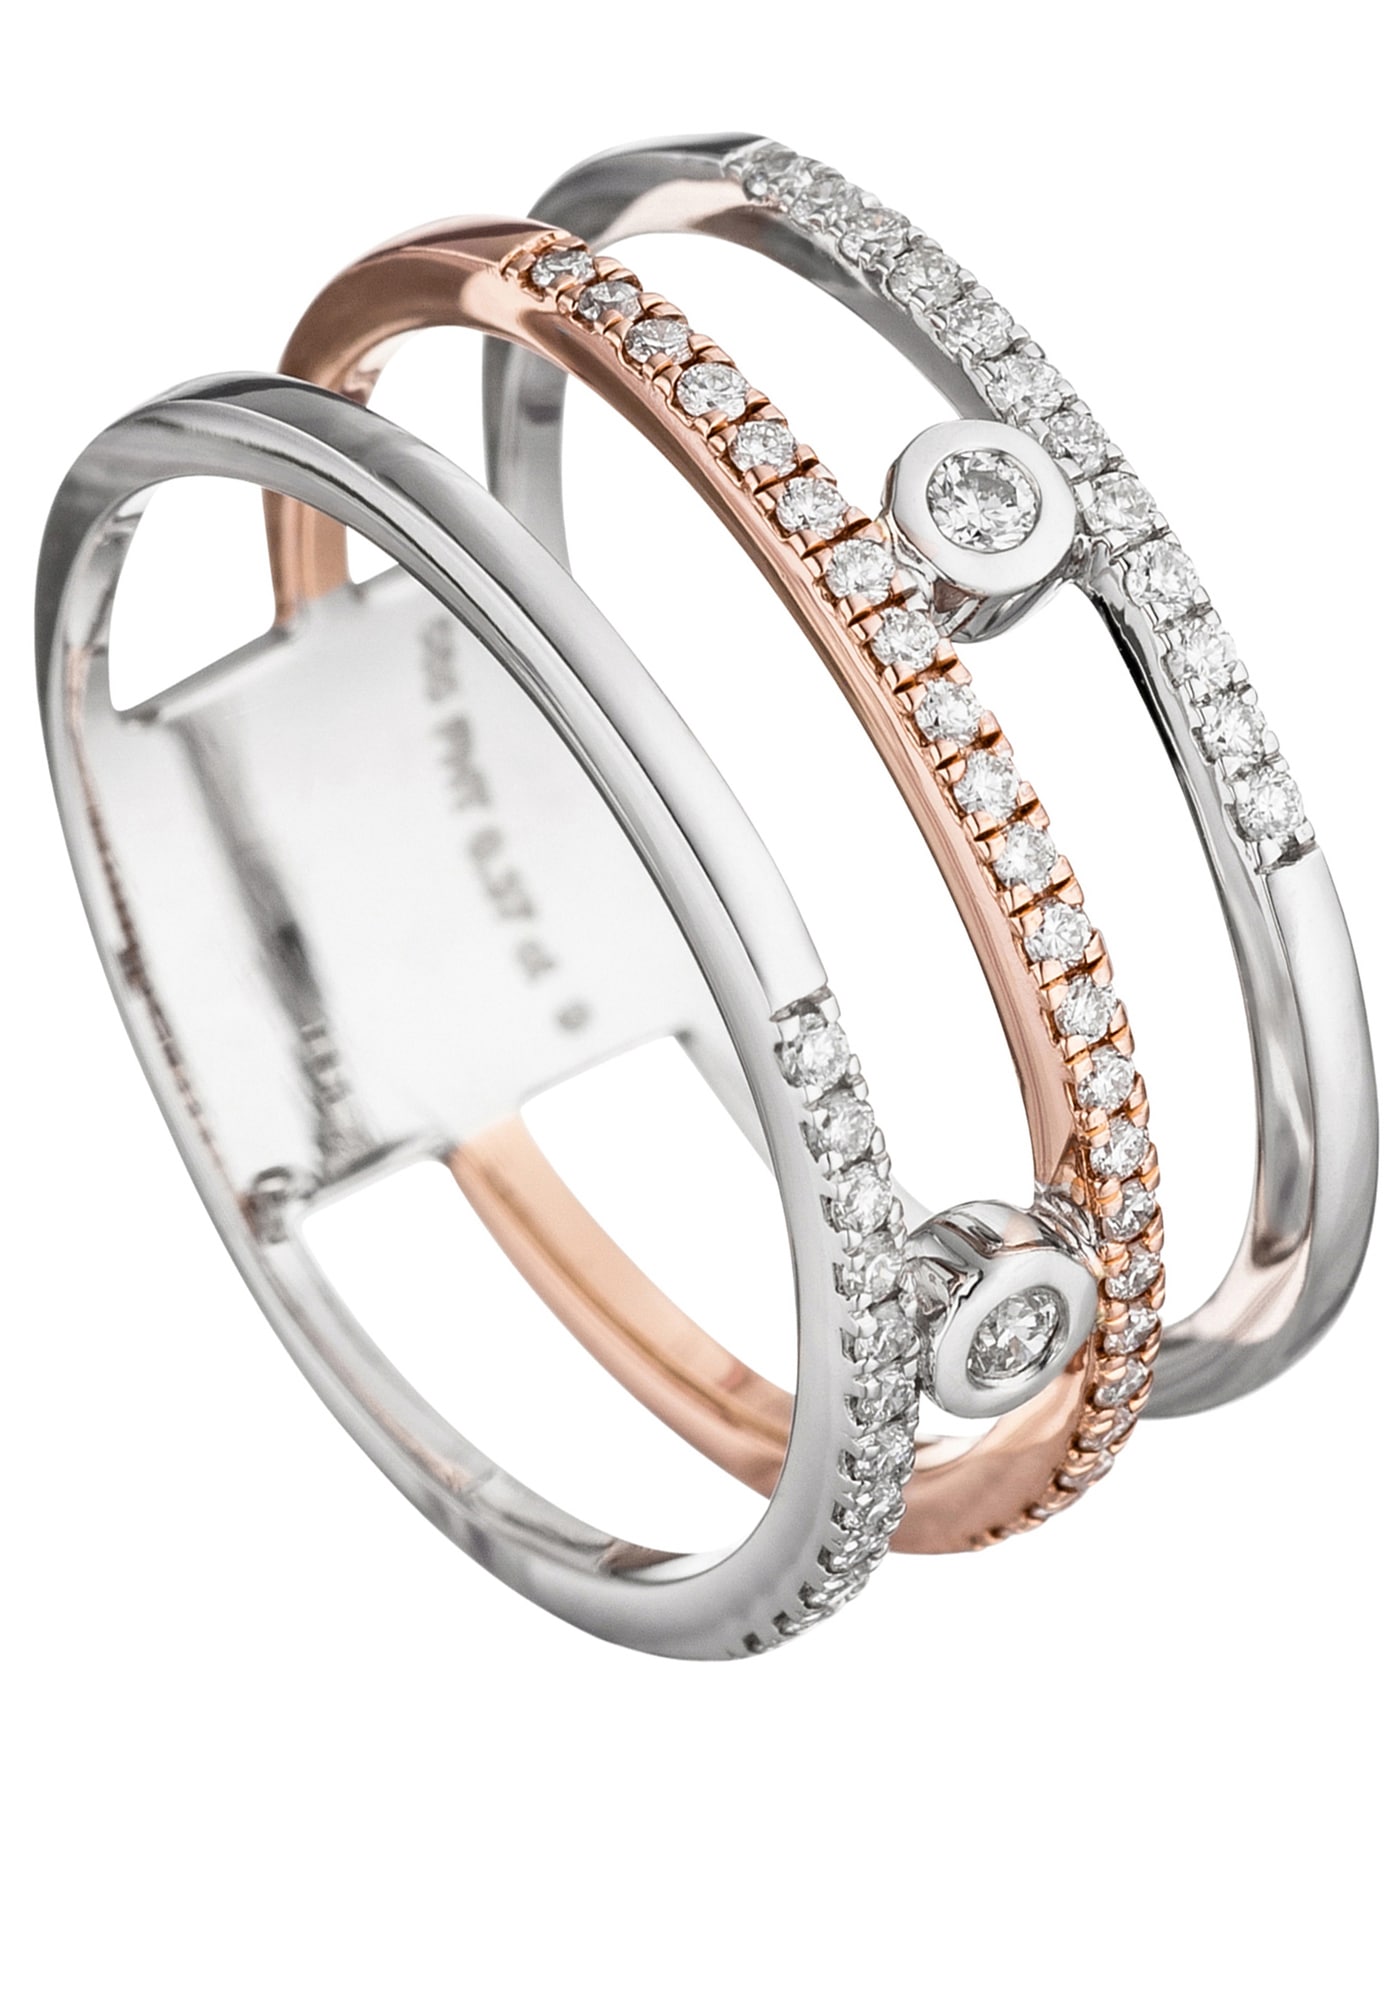 JOBO Fingerring »Breiter Ring mit 49 Diamanten«, 585 Gold bicolor kaufen |  I'm walking